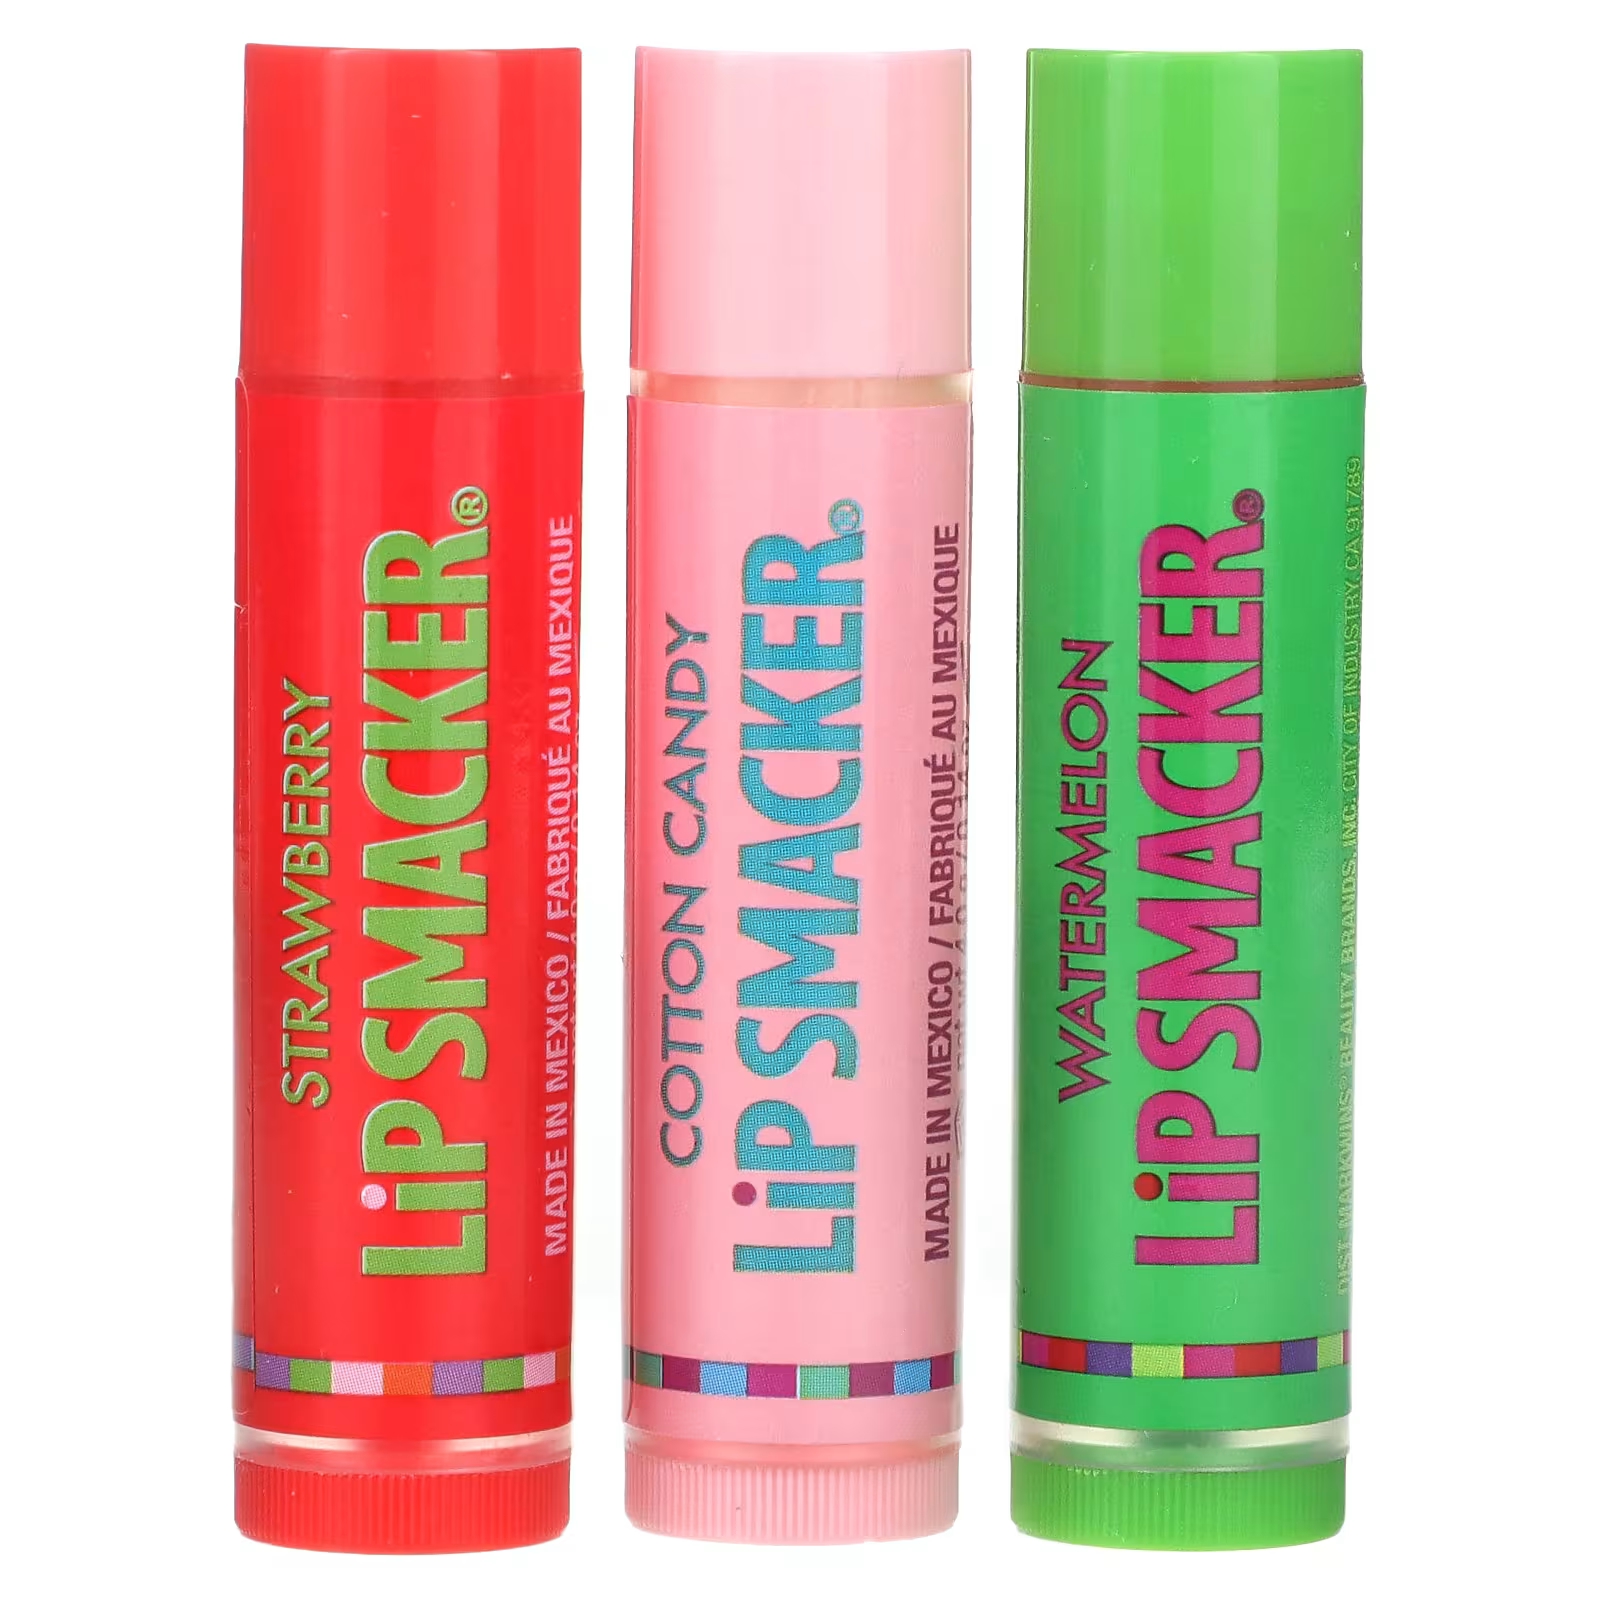 Бальзам для губ Lip Smacker Original & Best Flavors клубника, сахарная вата, арбуз